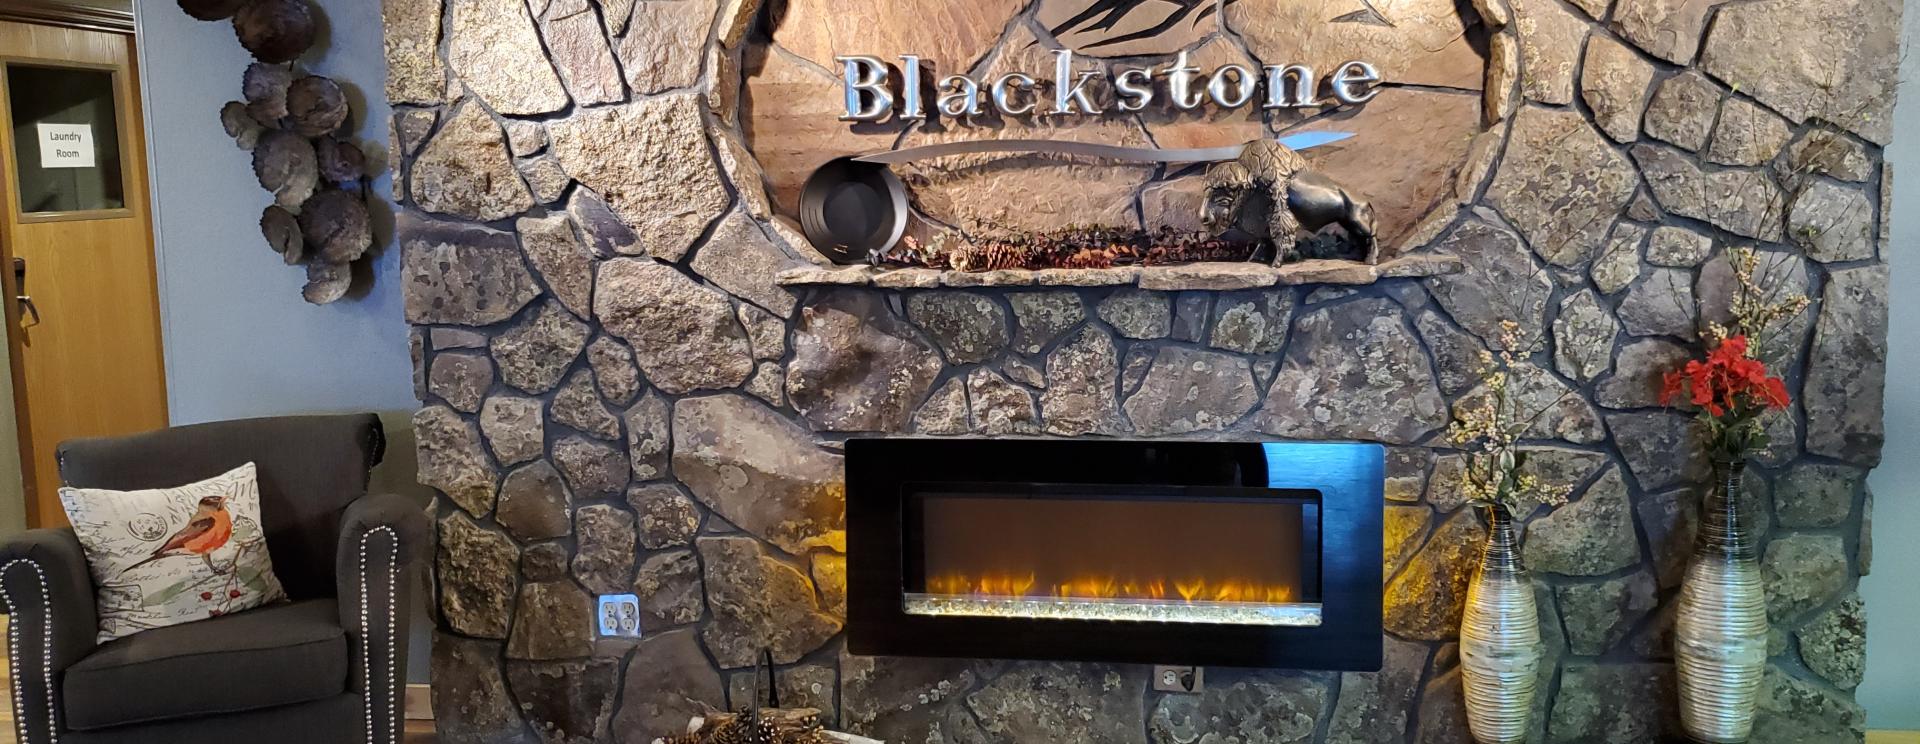 Blackstone Lodge & Suites